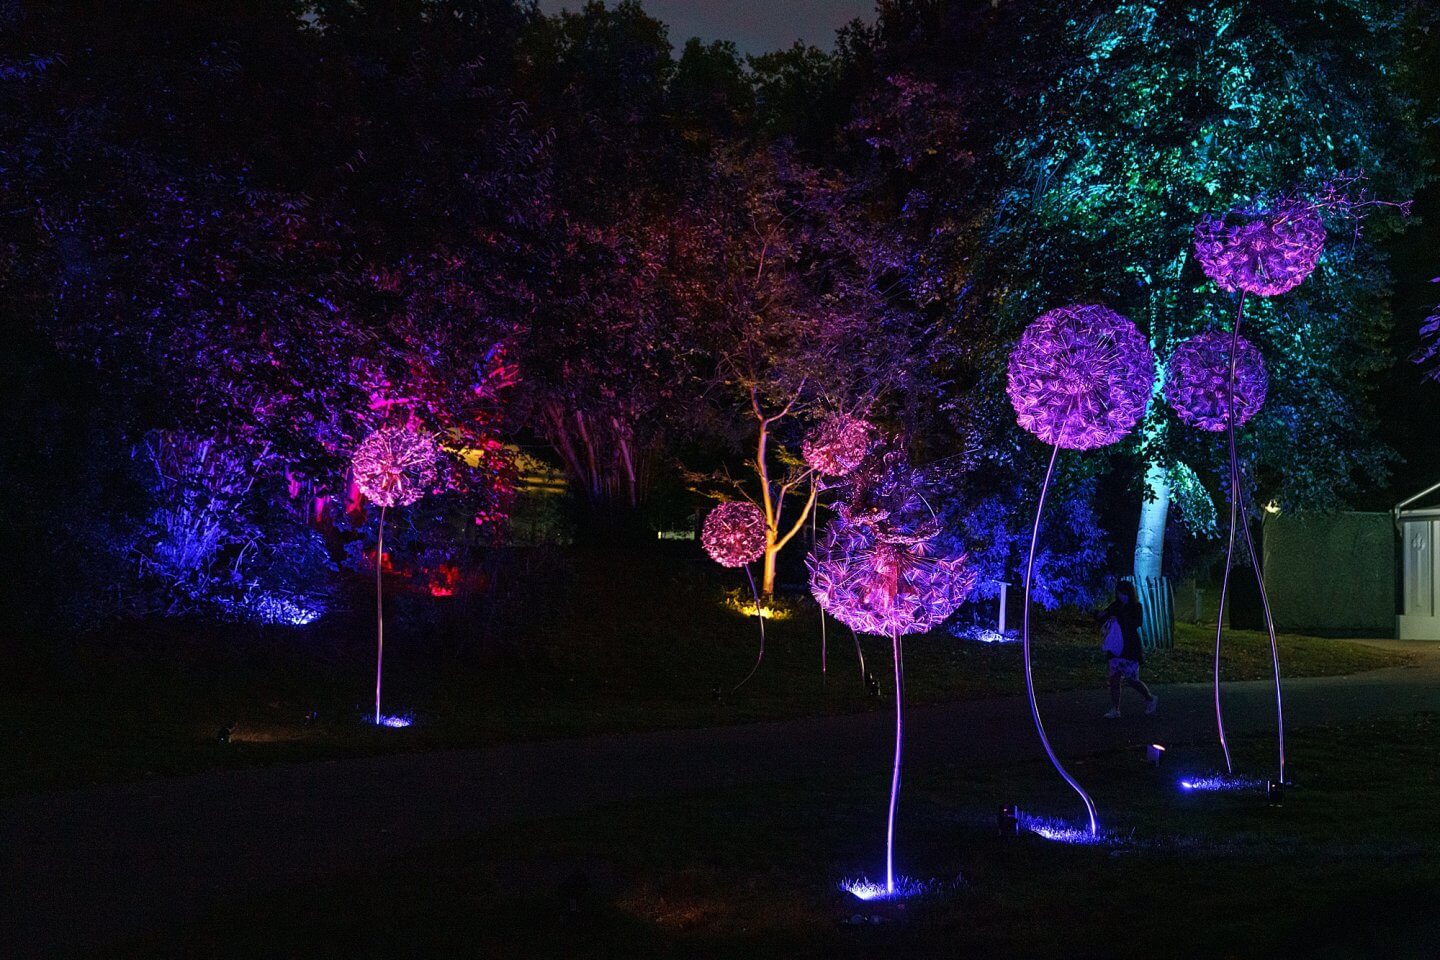 lit dandelion sculpture night glow Chelsea flower show